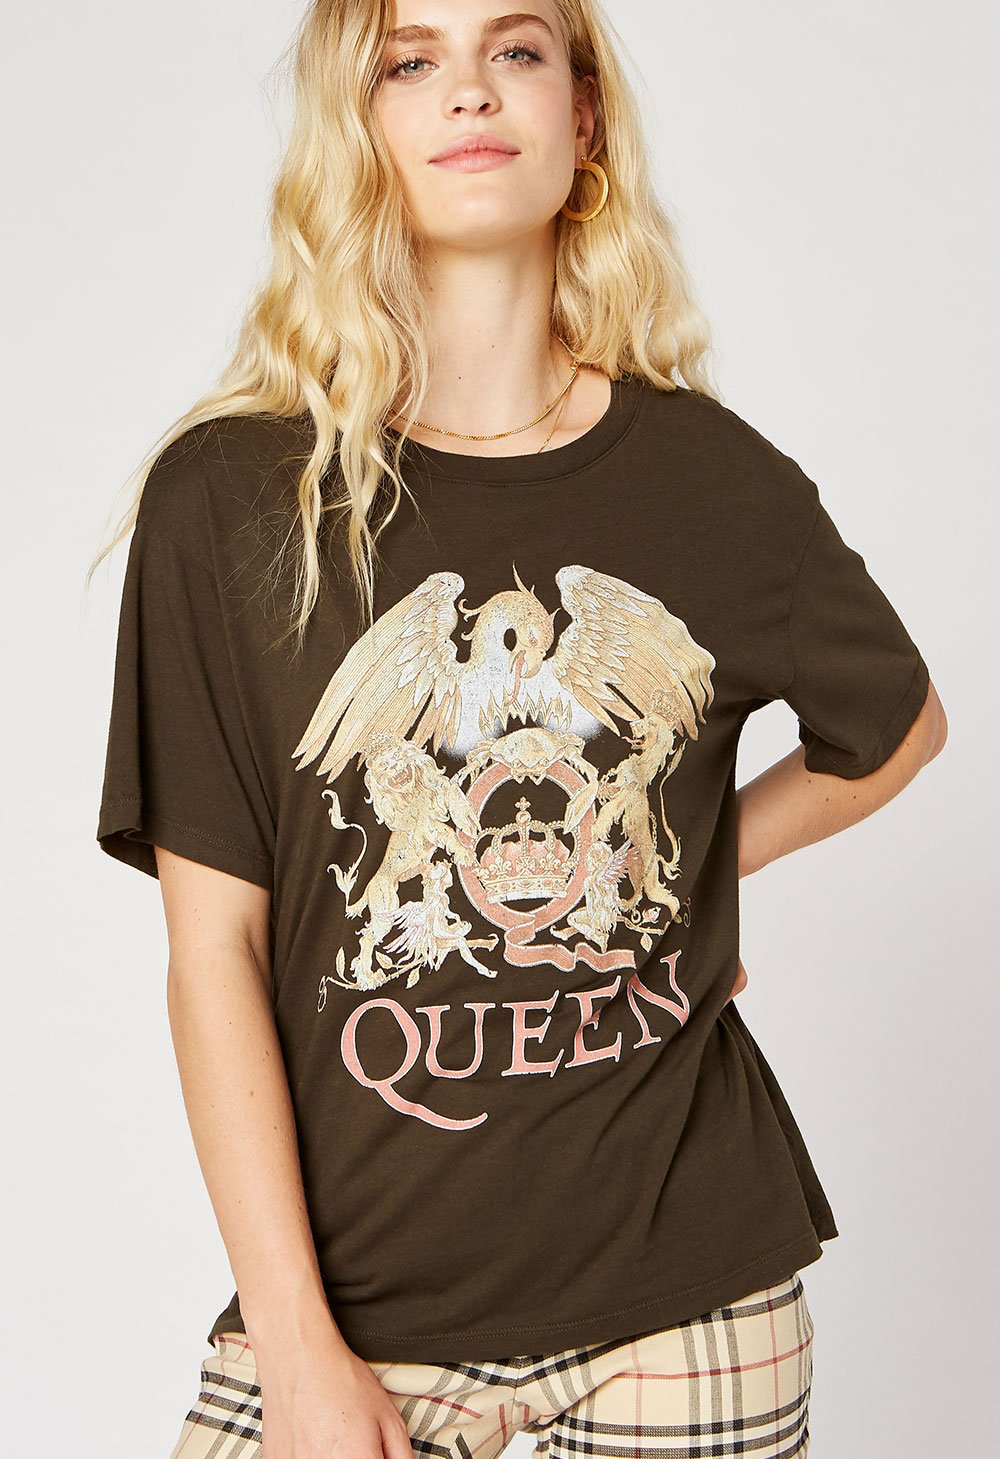 Queen Crest Boyfriend Tee - Kingfisher Road - Online Boutique